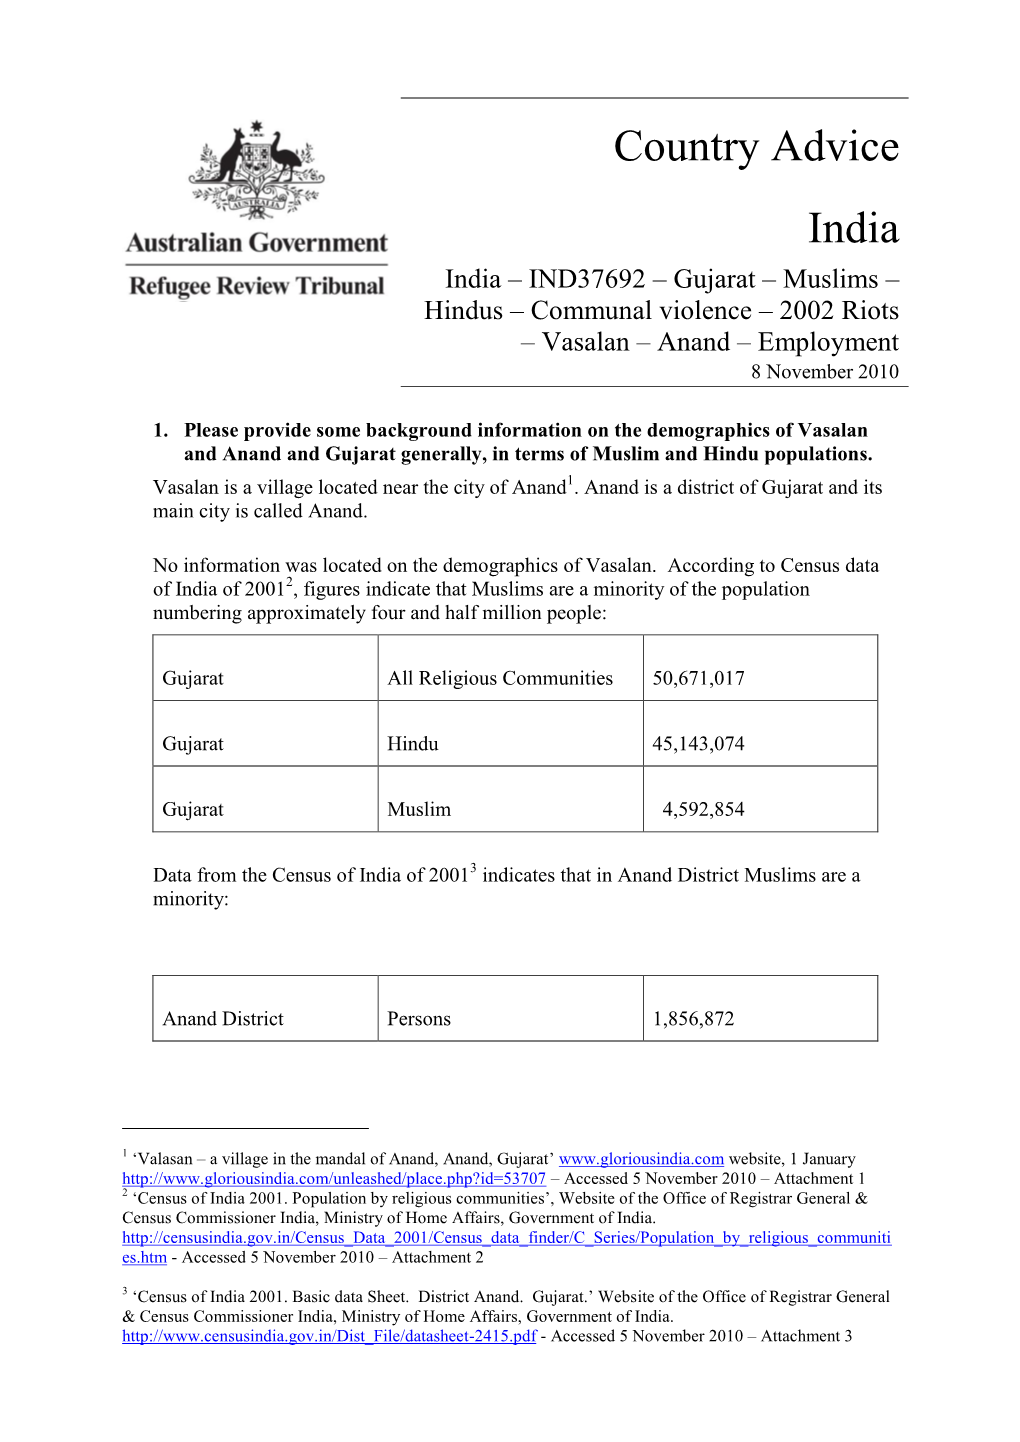 Hindus – Communal Violence – 2002 Riots – Vasalan – Anand – Employment 8 November 2010